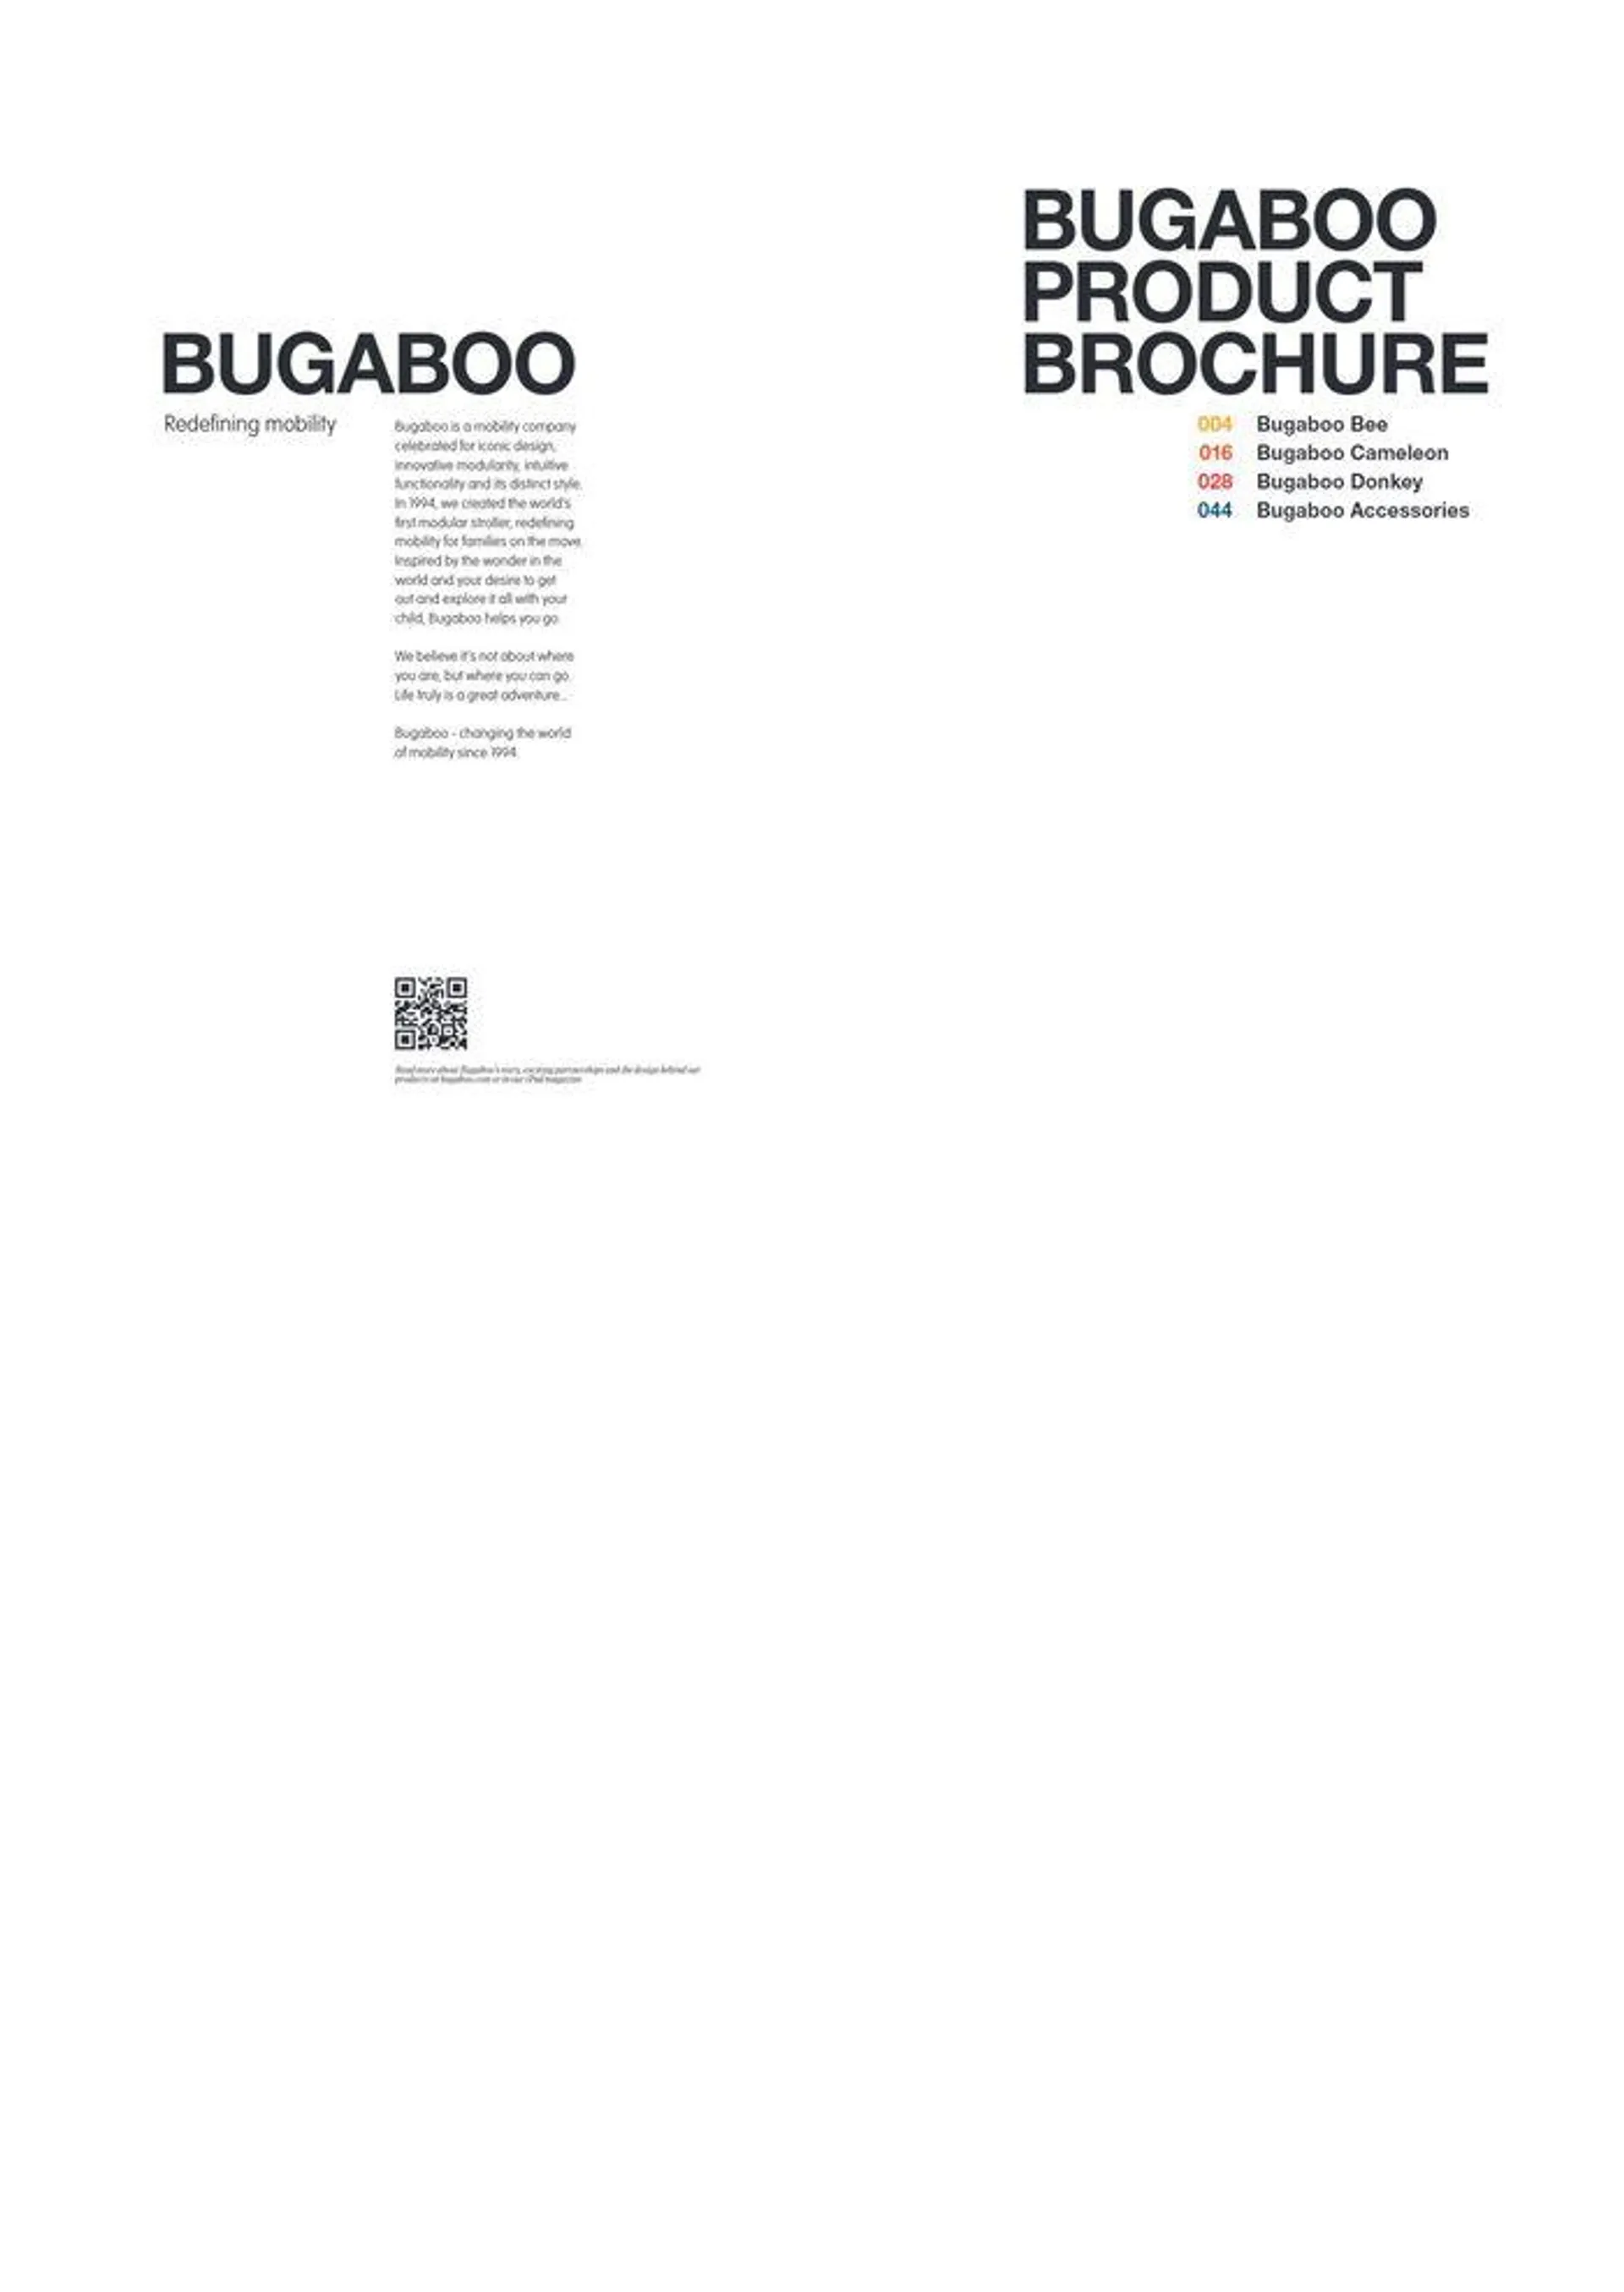 Bugaboo product brochure - 2